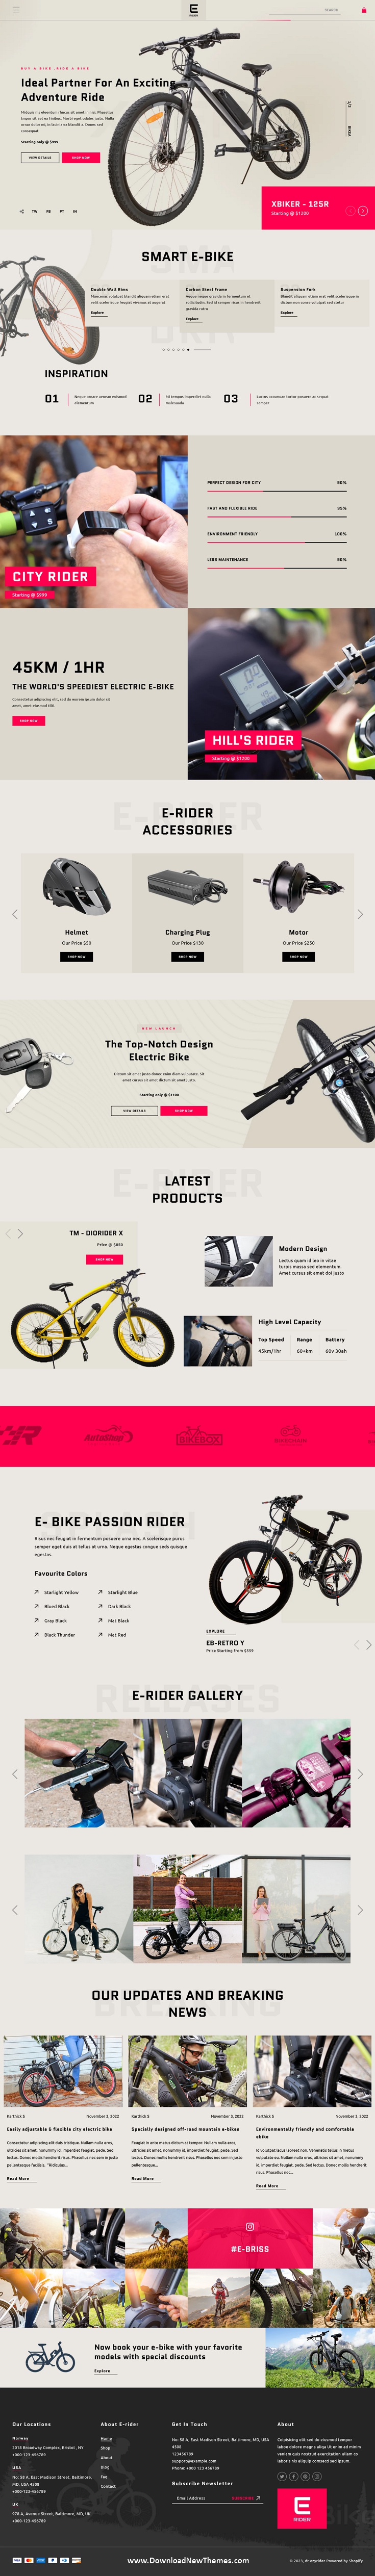 Ezyrider - Single Product, Bike Shop Shopify Theme Review